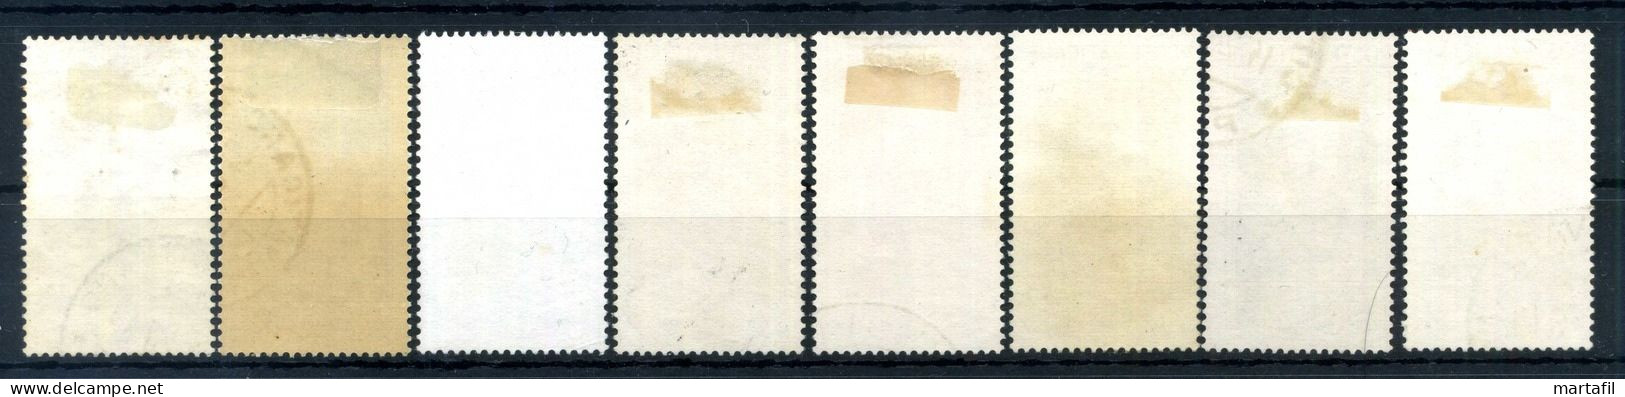 1936 VATICANO SET USATO - Used Stamps